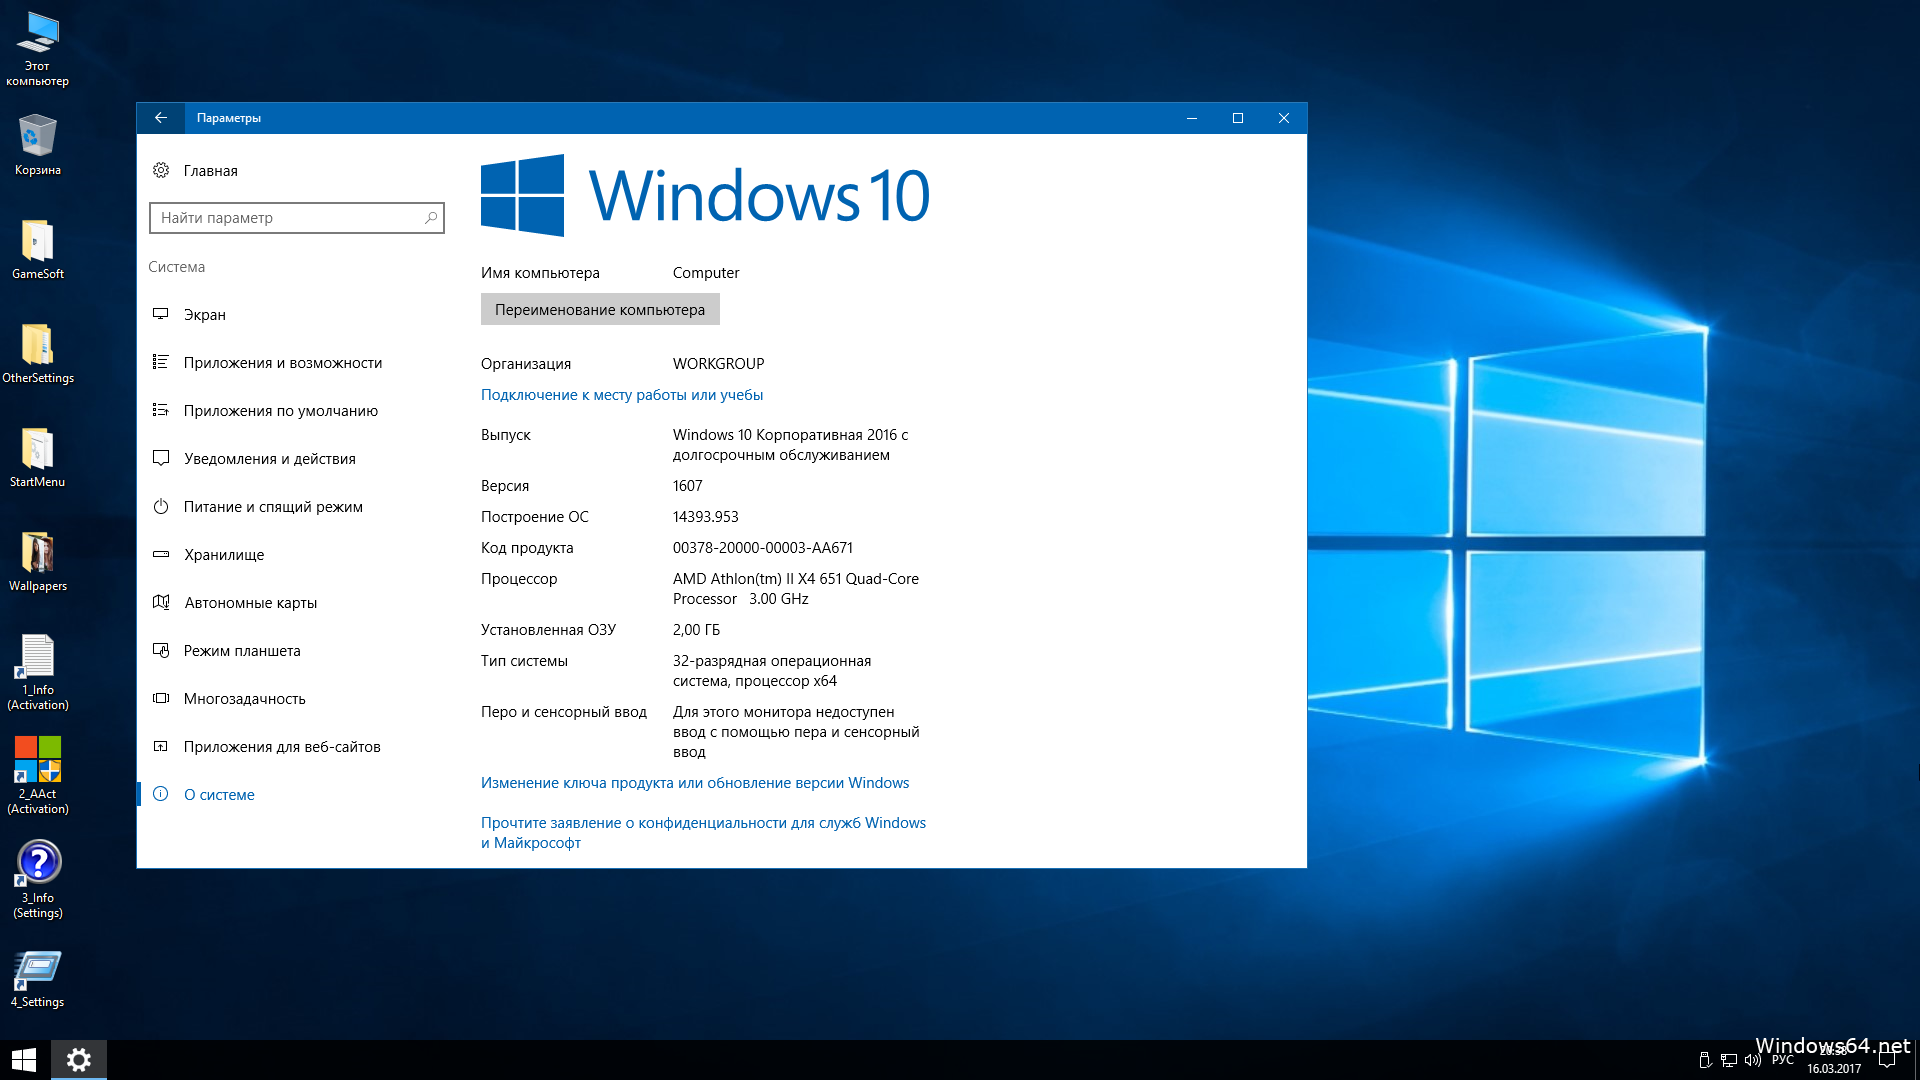 Вин 10 64 бит. Windows 10 Pro корпоративная. Windows 10 Enterprise 2016 LTSB. Windows 10 Enterprise Box. Операционная система Windows 10 Pro x64.